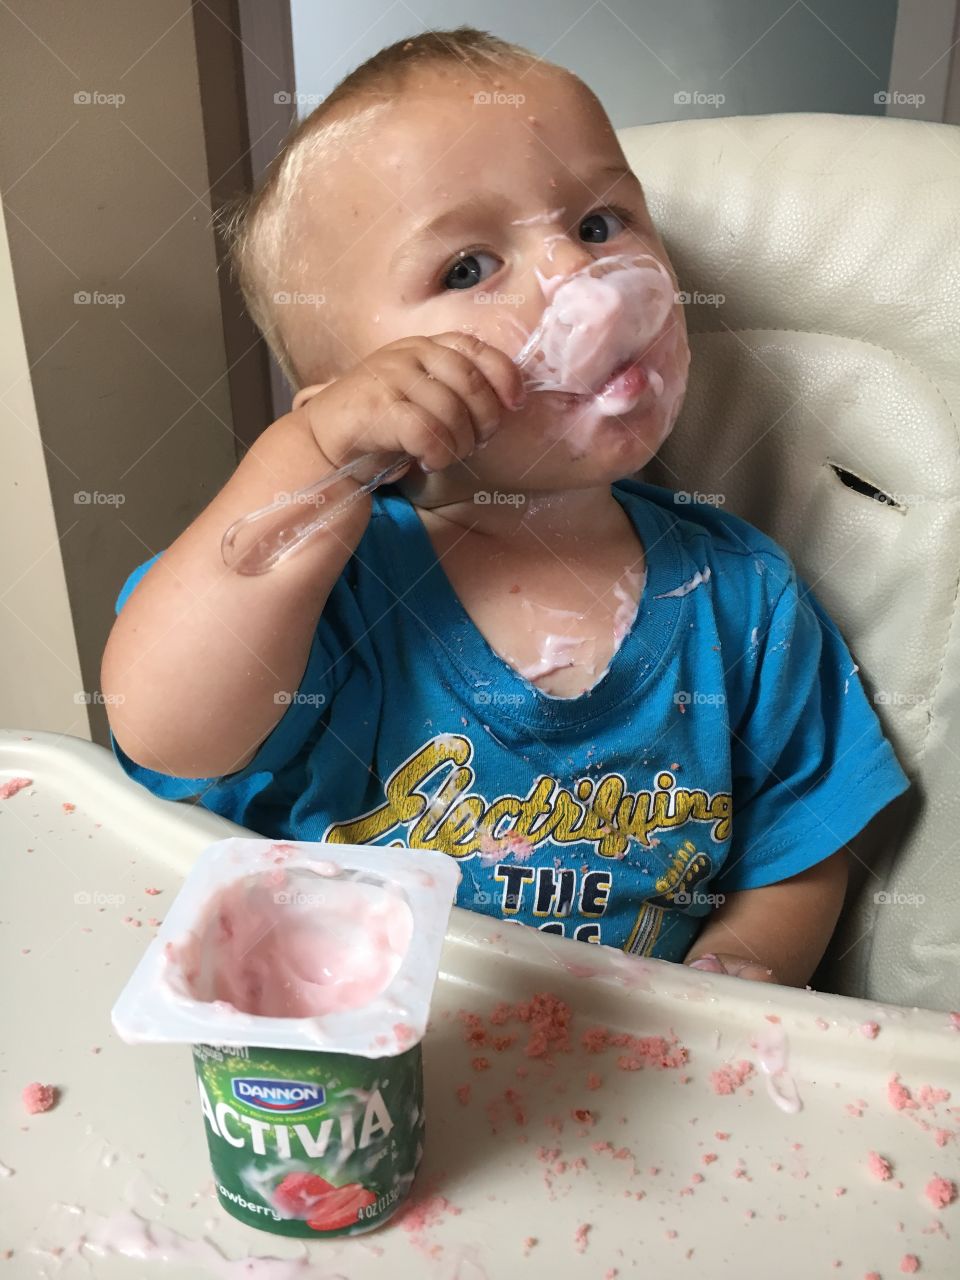 Cute baby eating Dannon Activia strawberry flavored yogurt 